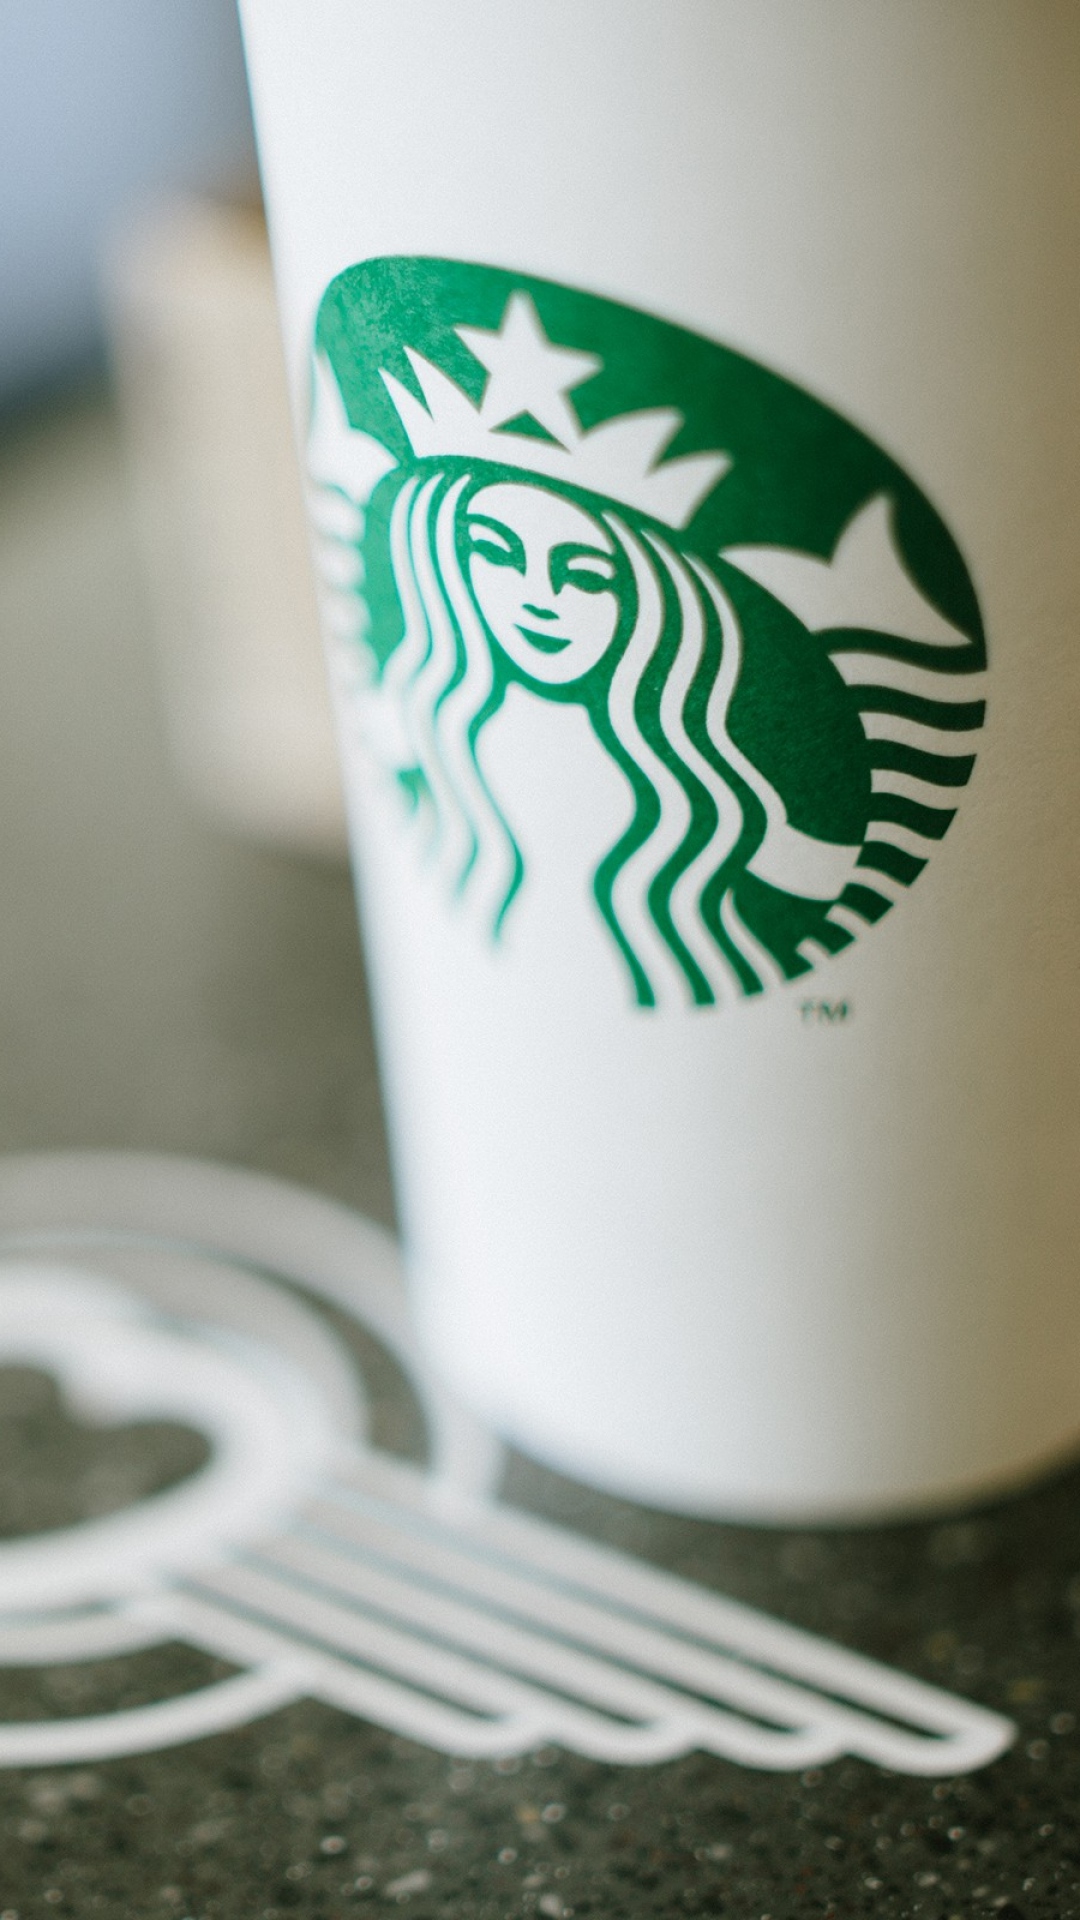 Starbucks Coffee Cup Tilt Shift Android Wallpapers - Starbucks New Logo 2011 - HD Wallpaper 